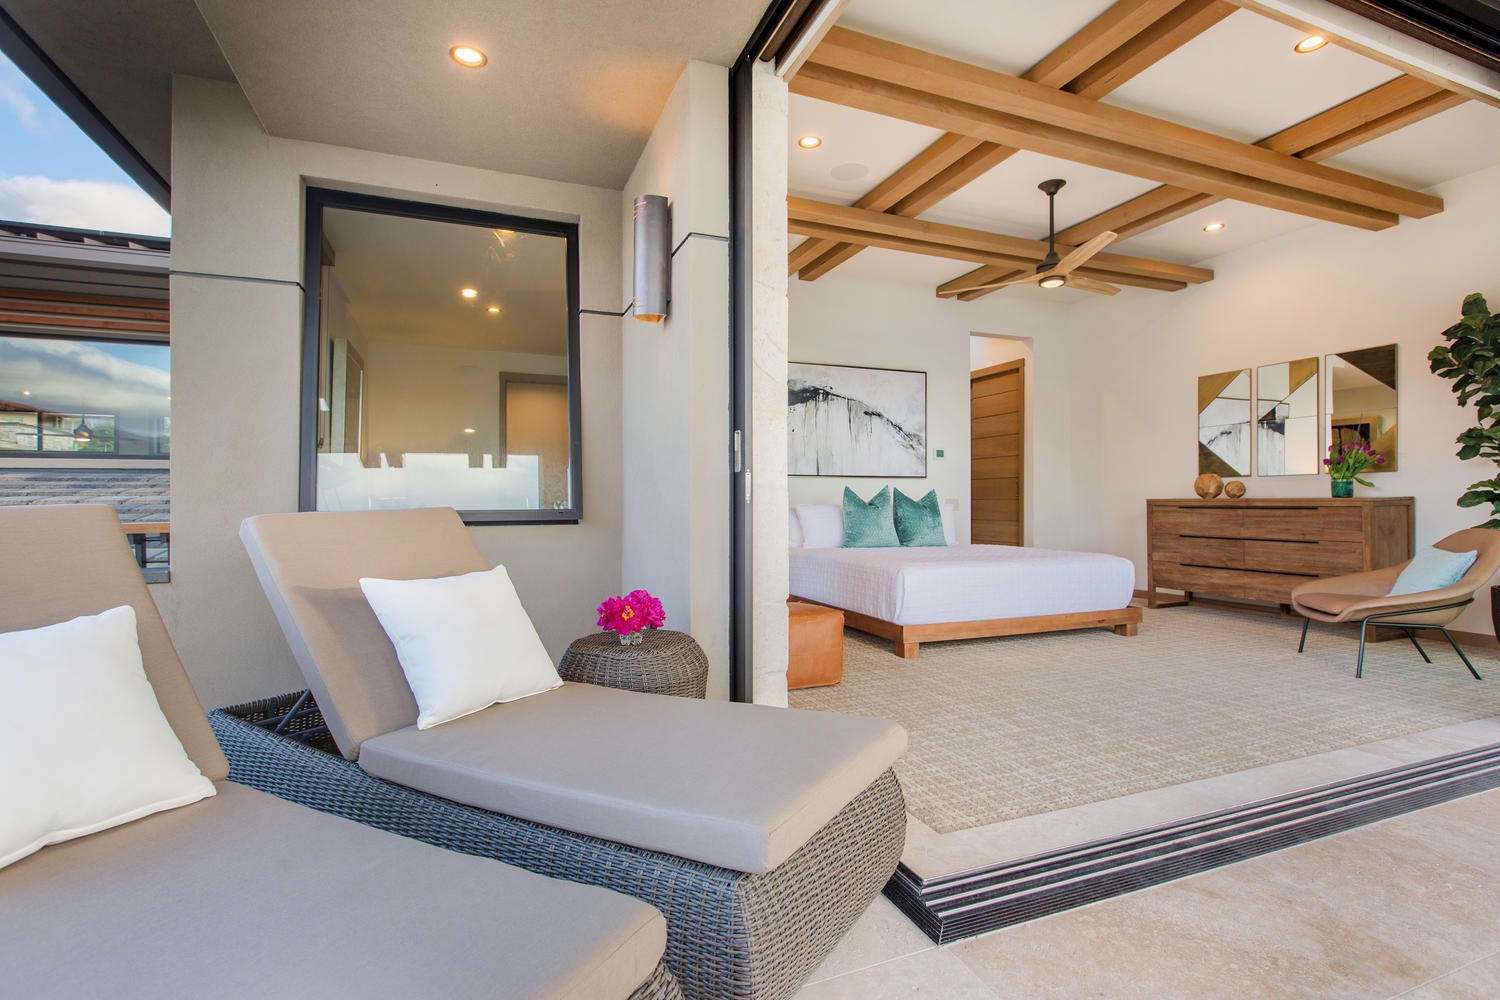 Honolulu Vacation Rentals, Ocean House 4 Bedroom - Second primary bedroom lanai